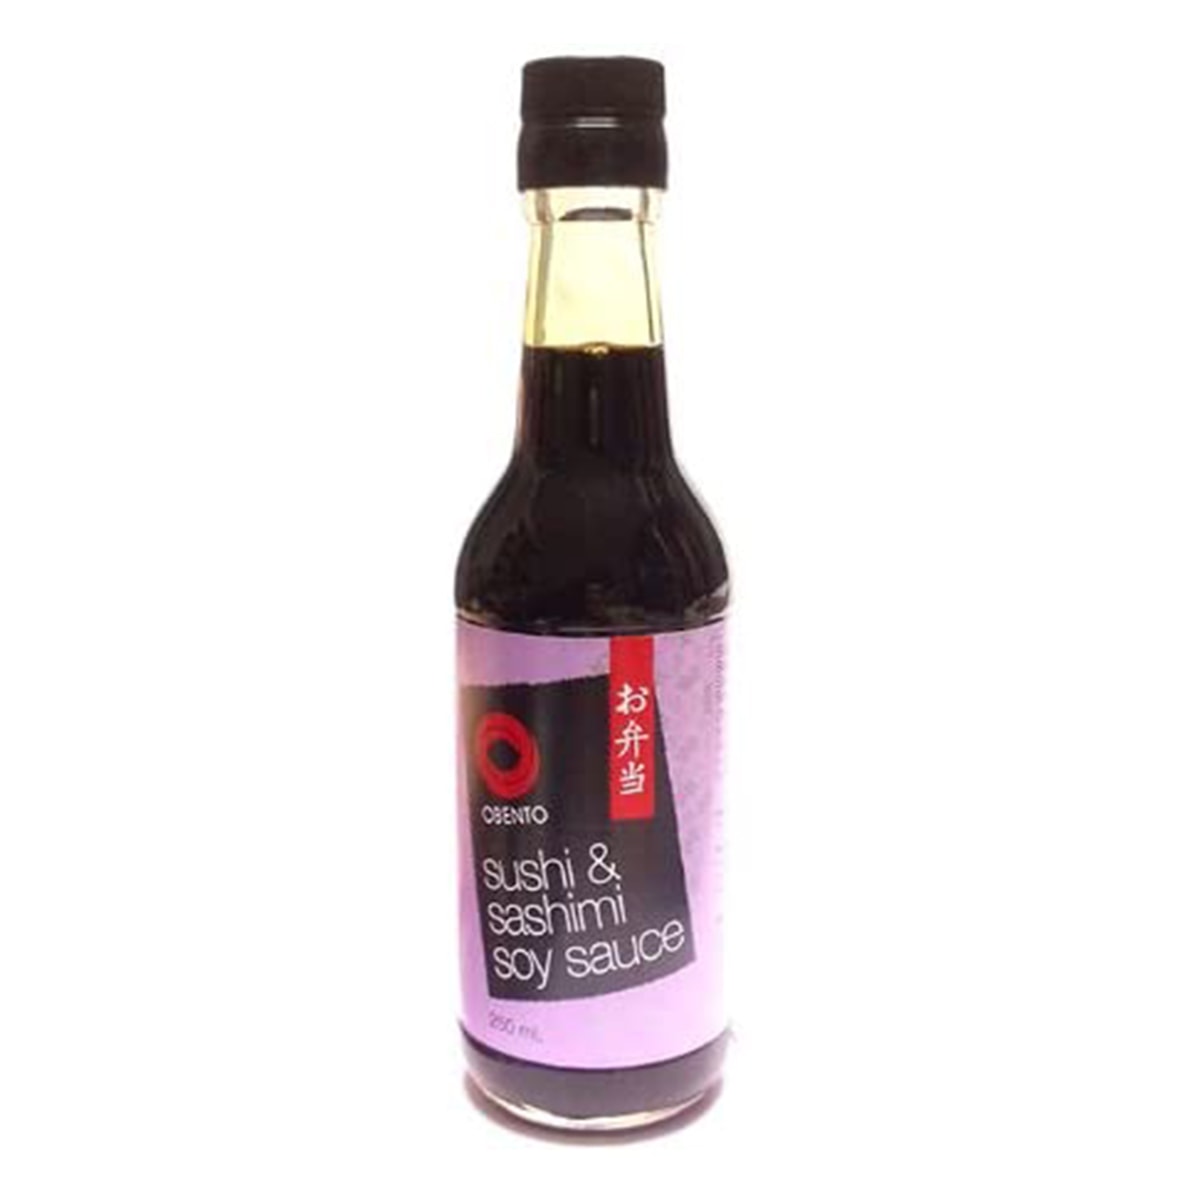 Buy Obento Sushi and Sashimi Soy Sauce - 250 ml